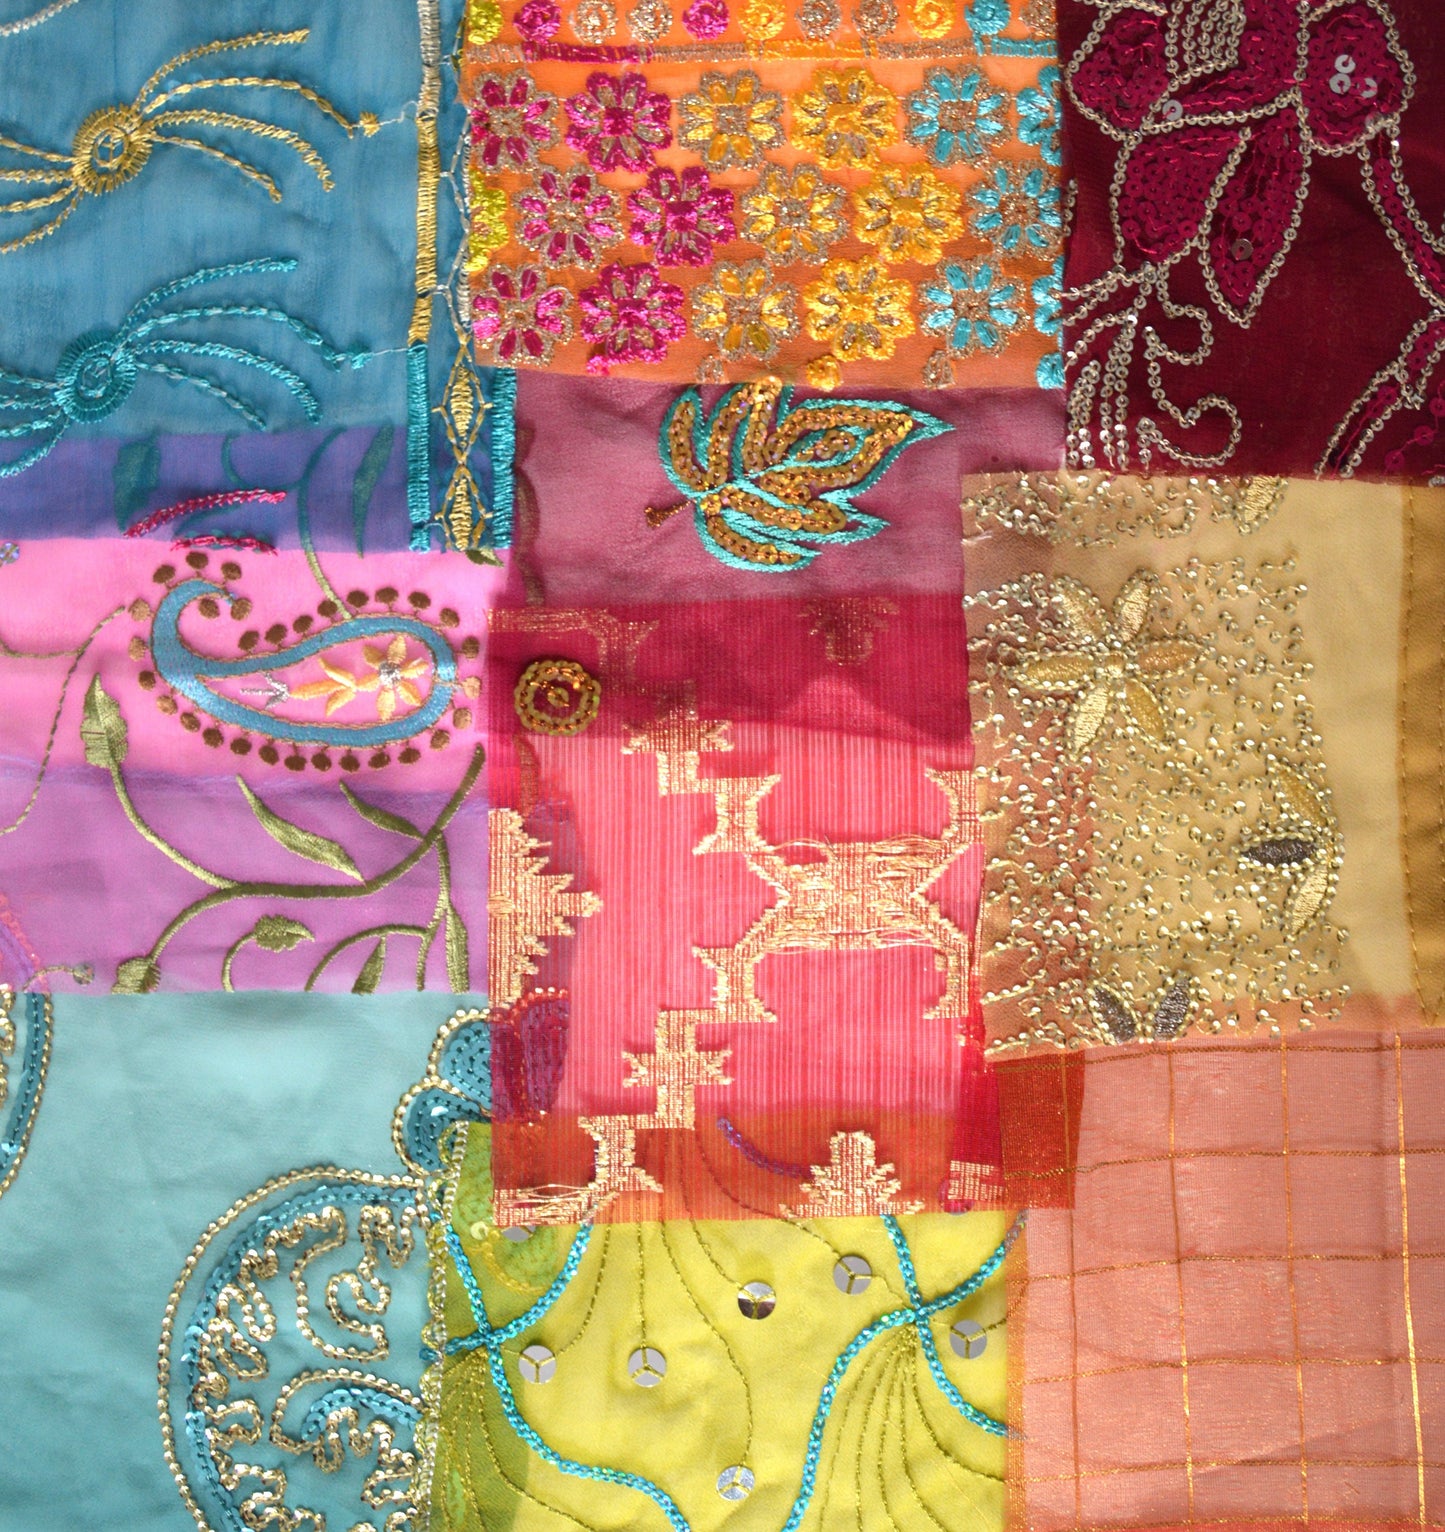 Mixed Assorted Embellished Sari Fabric Remnants Scraps - 10 Pieces